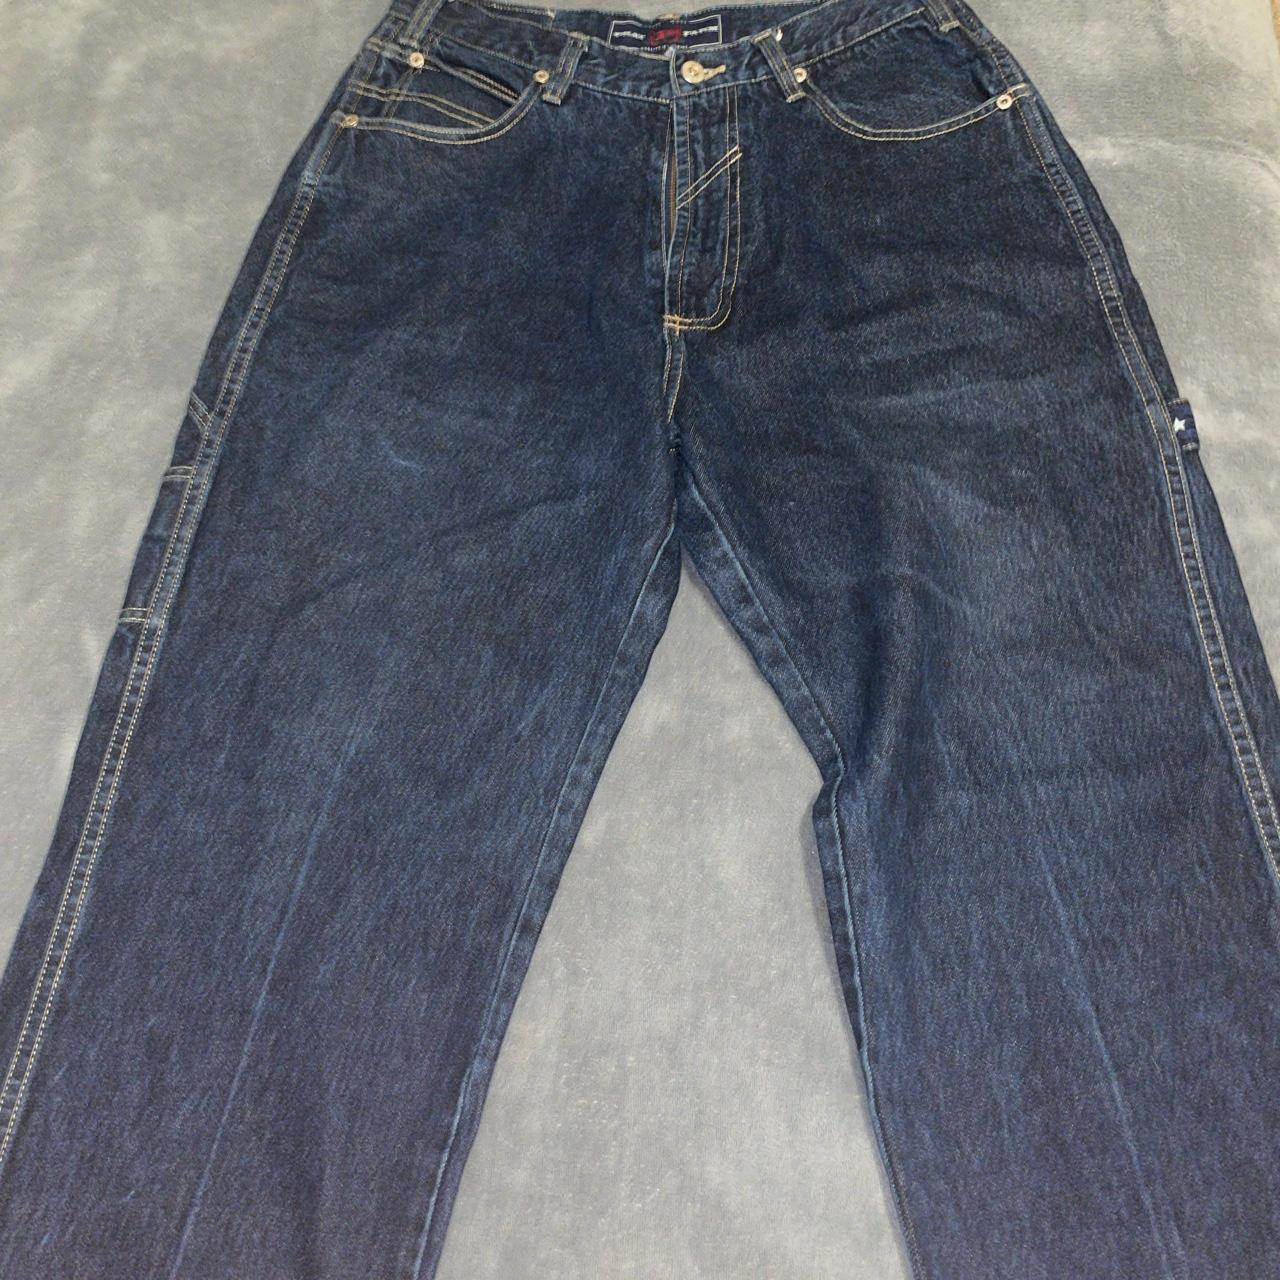 30x34 phat farm carpenter jeans nice and baggy fr so... - Depop